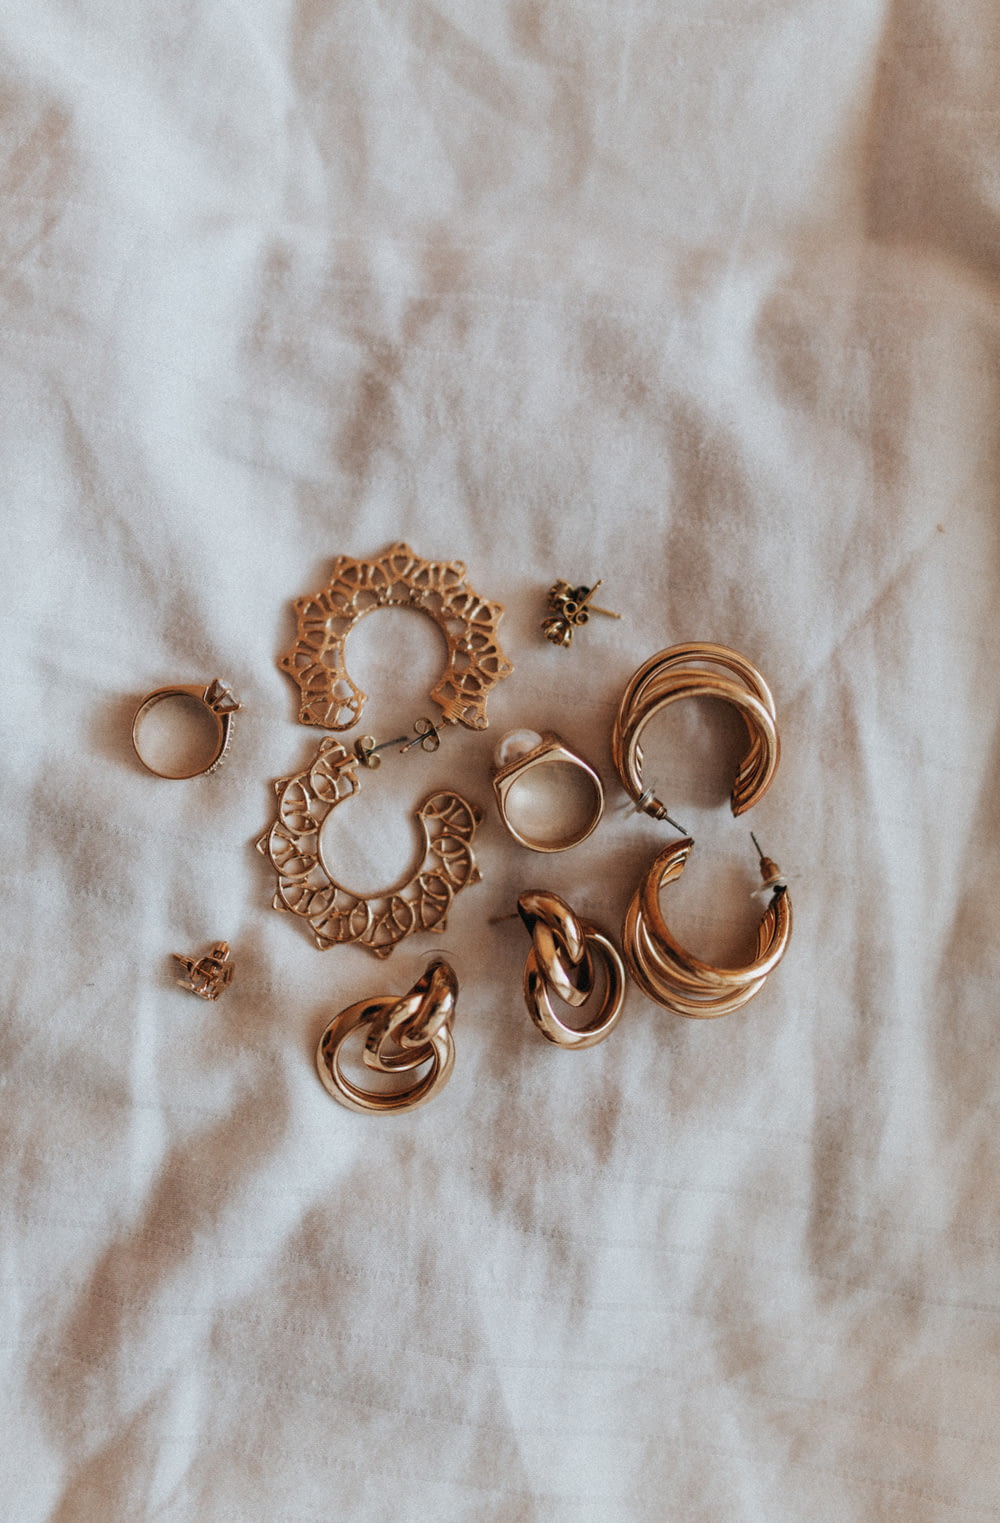 gold heart shaped earrings on white textile